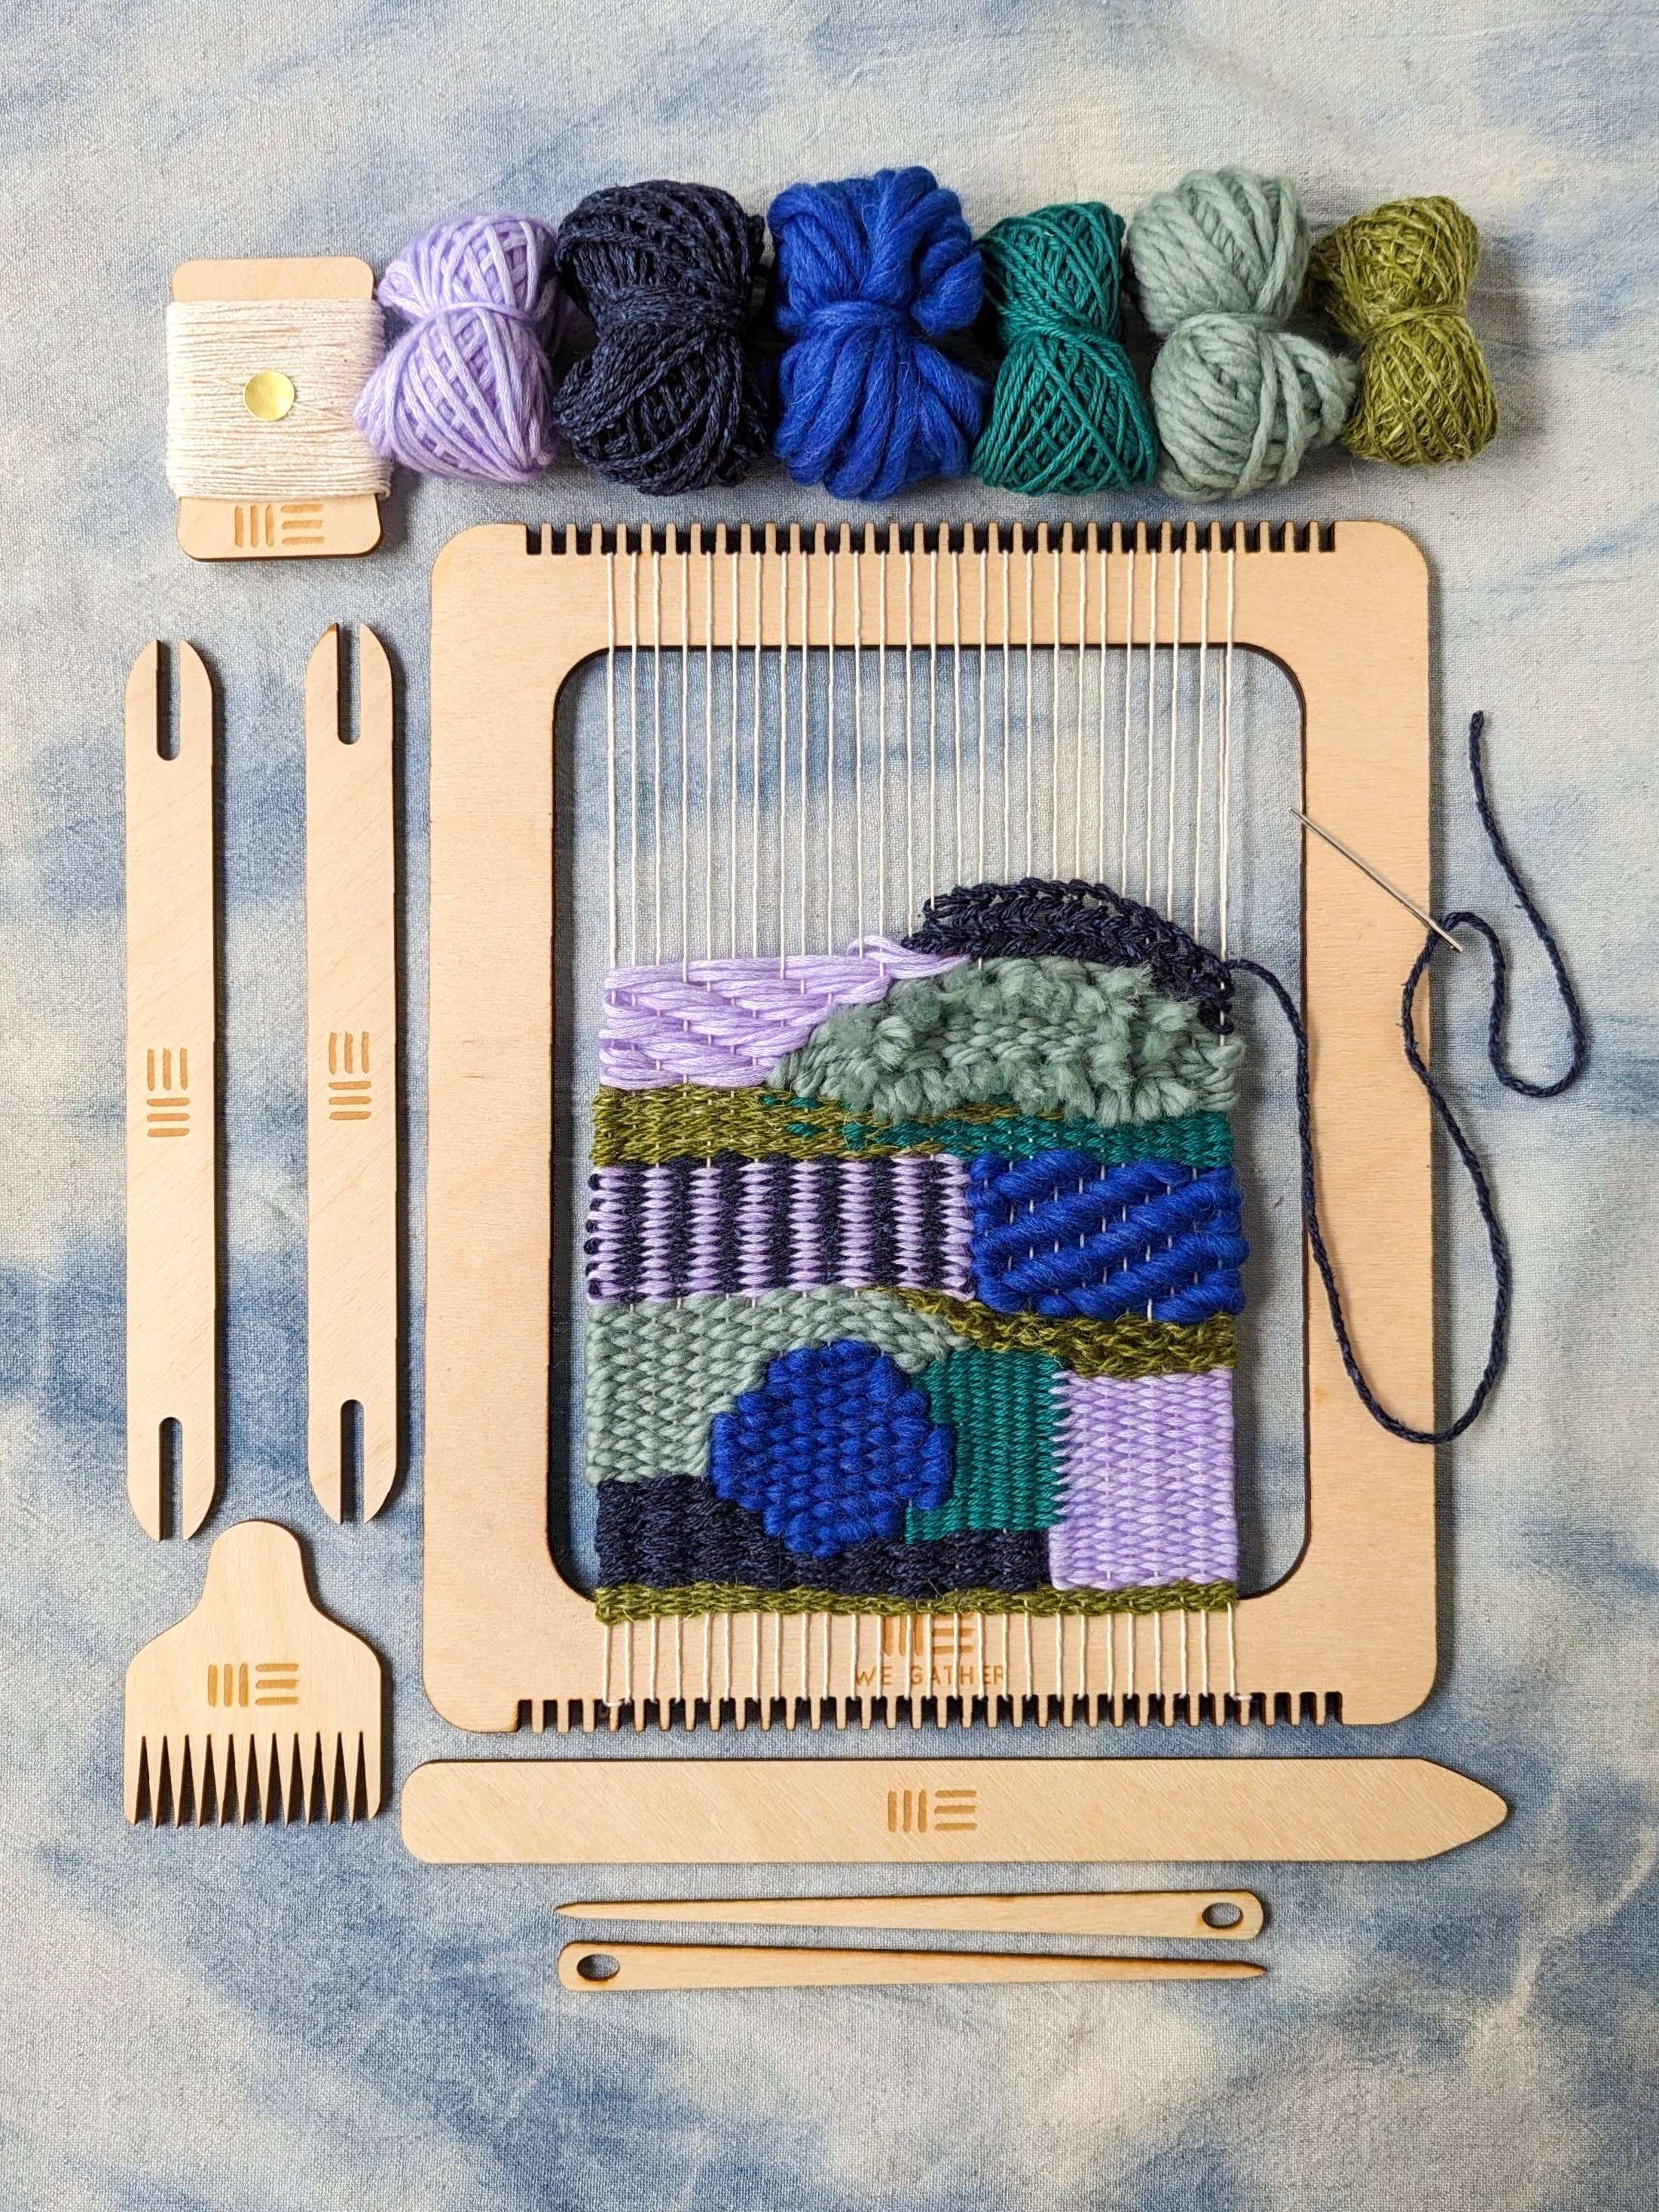 Mini Loom Kit For Weaving I Darn Good Yarn